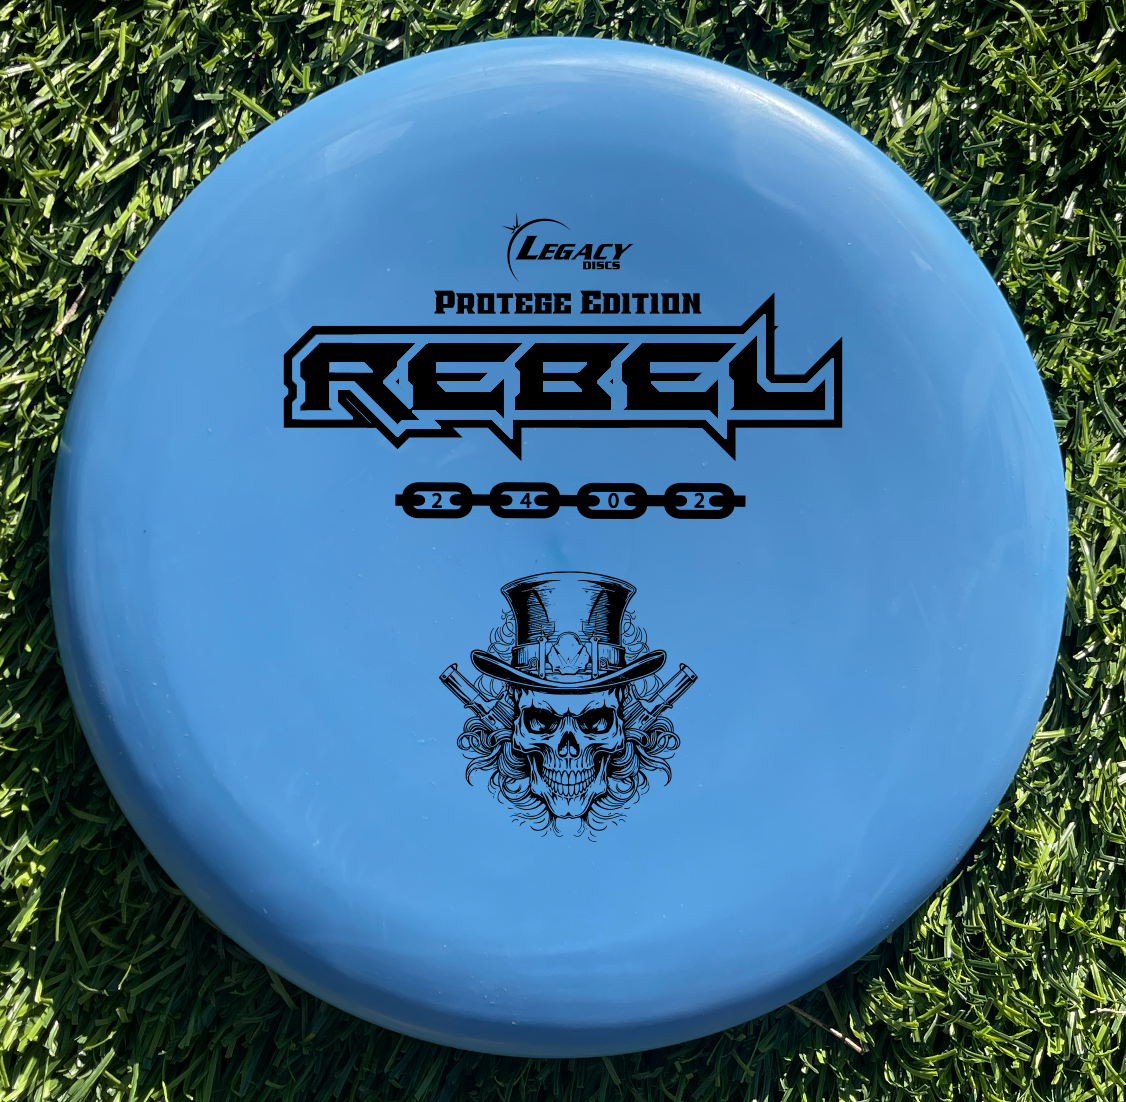 Legacy Protege Edition Rebel Putter Golf Disc